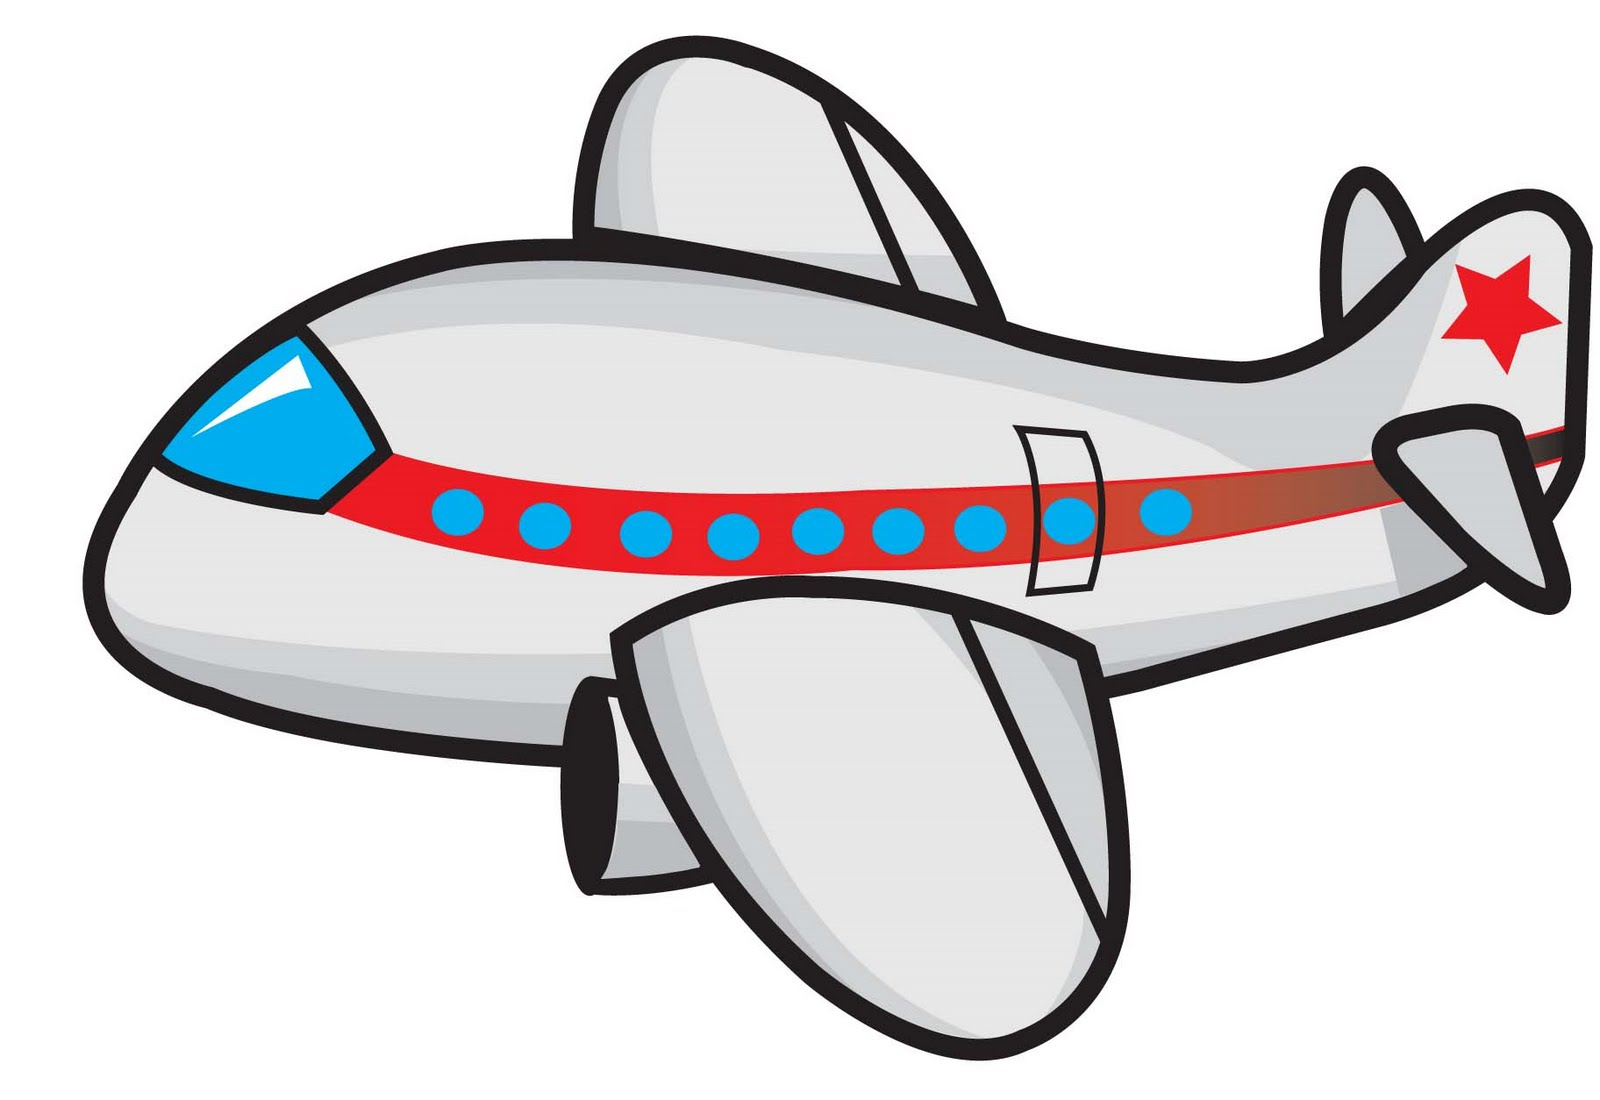 Cartoon Airplane Image